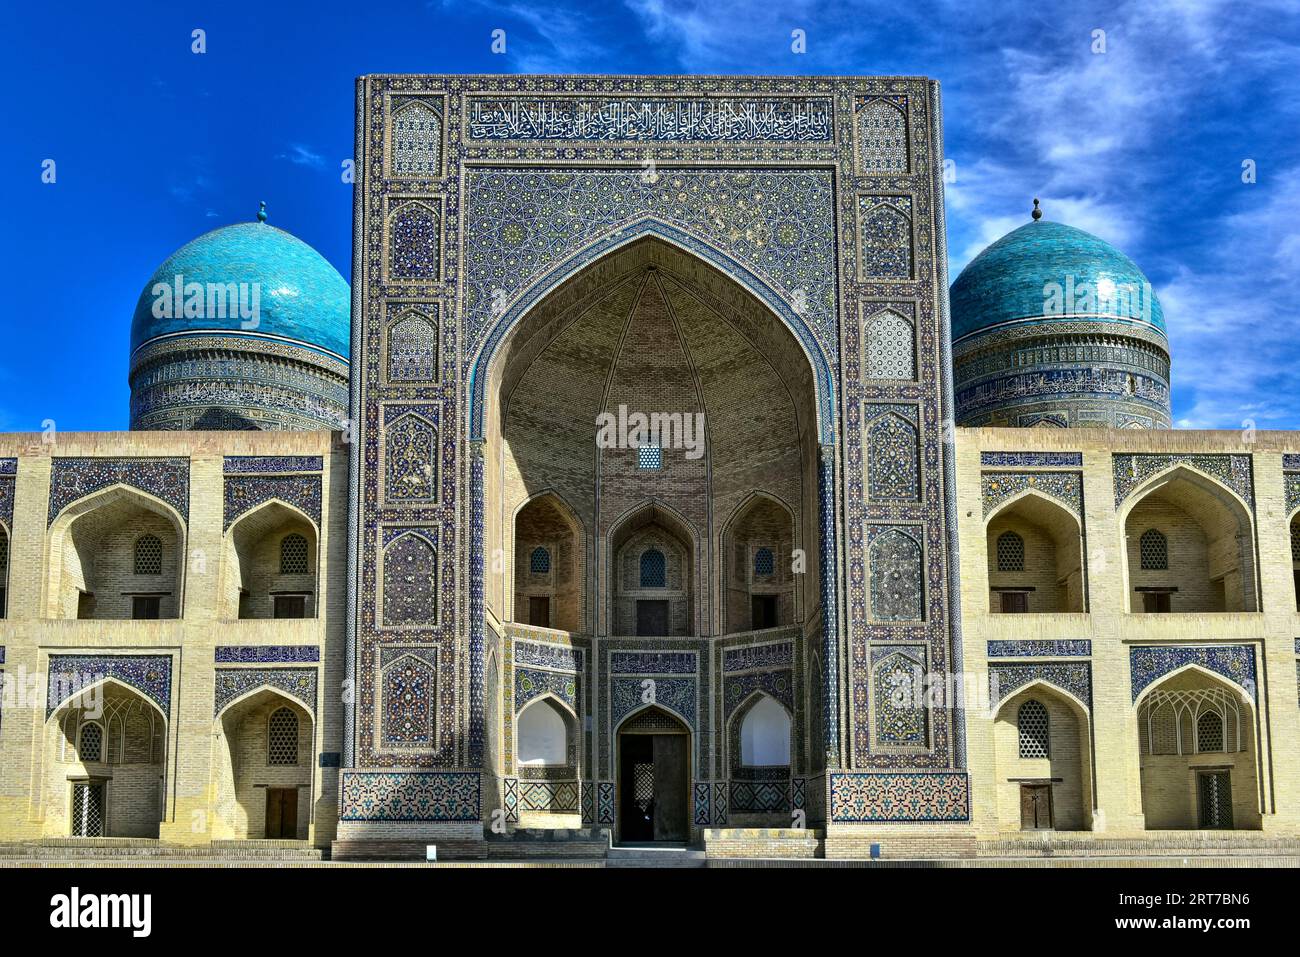 Mir-i-Arab Madrasa, Bukhara, Uzbekistan. Turquoise tiled domes, multiple iwans in its intricate facade Stock Photo